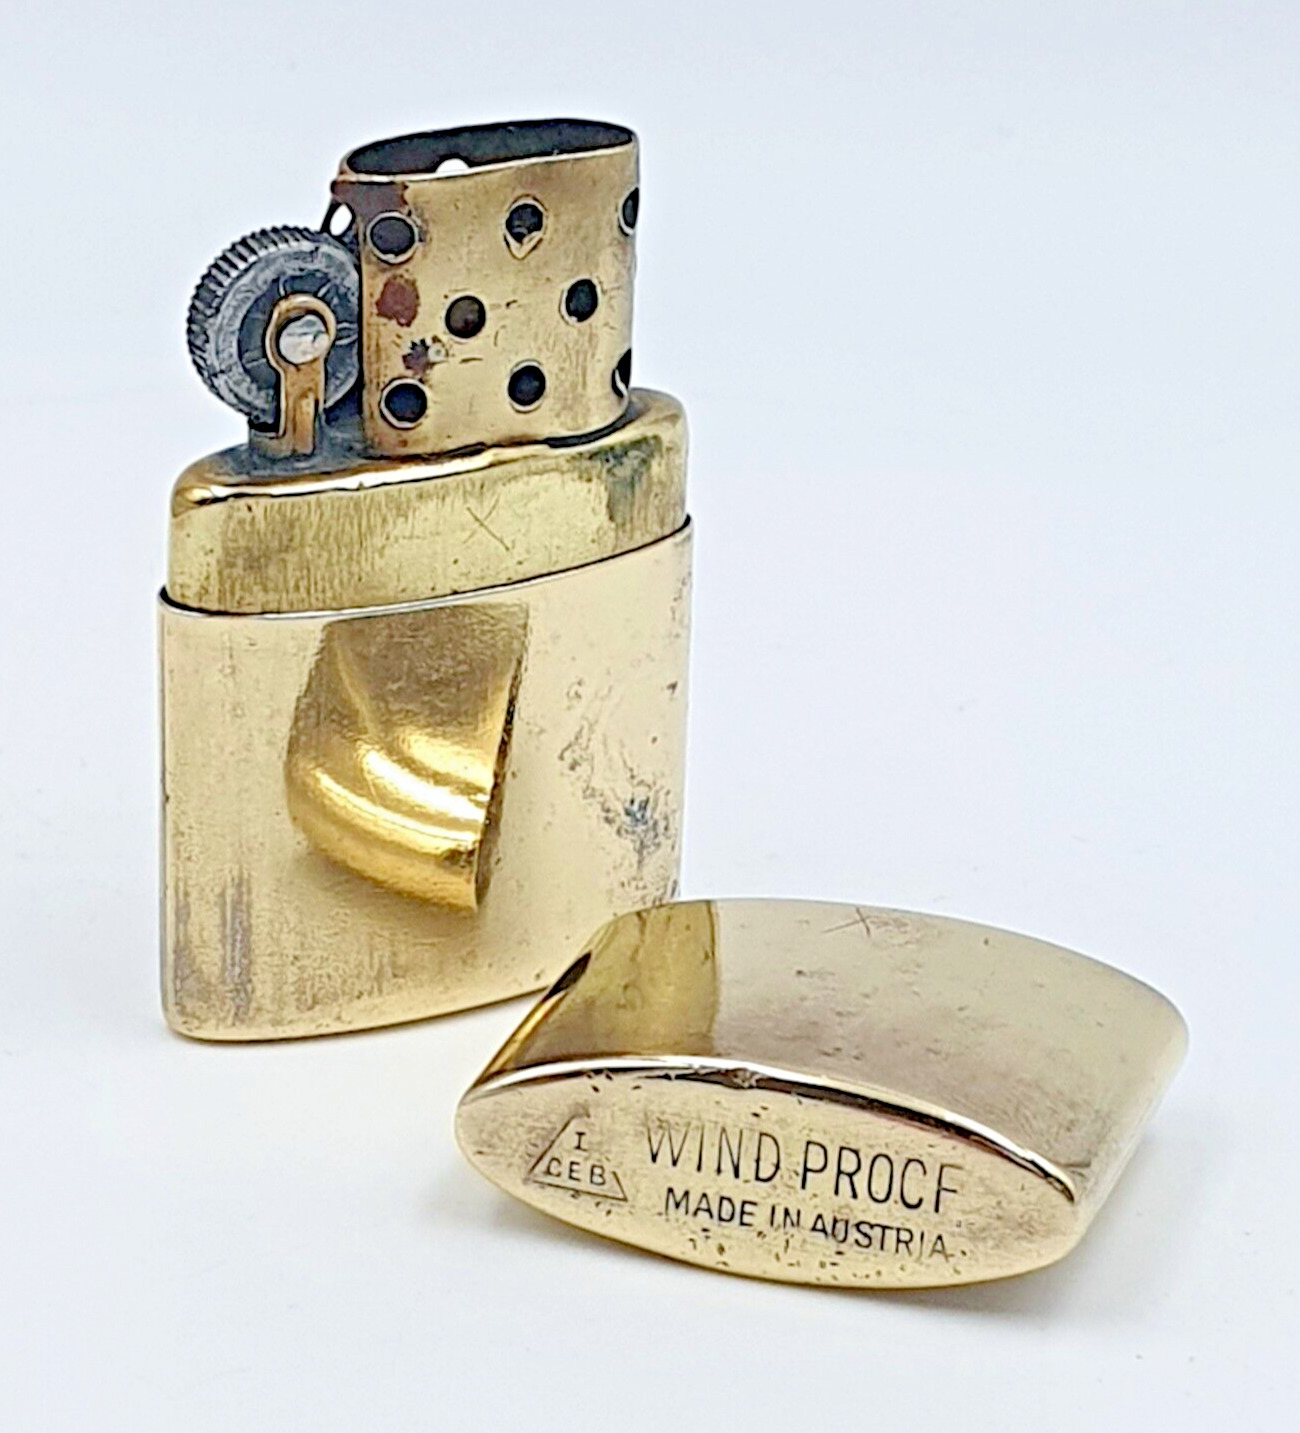 Early vintage Austrian brass petrol lighter - Rare collectible lighter